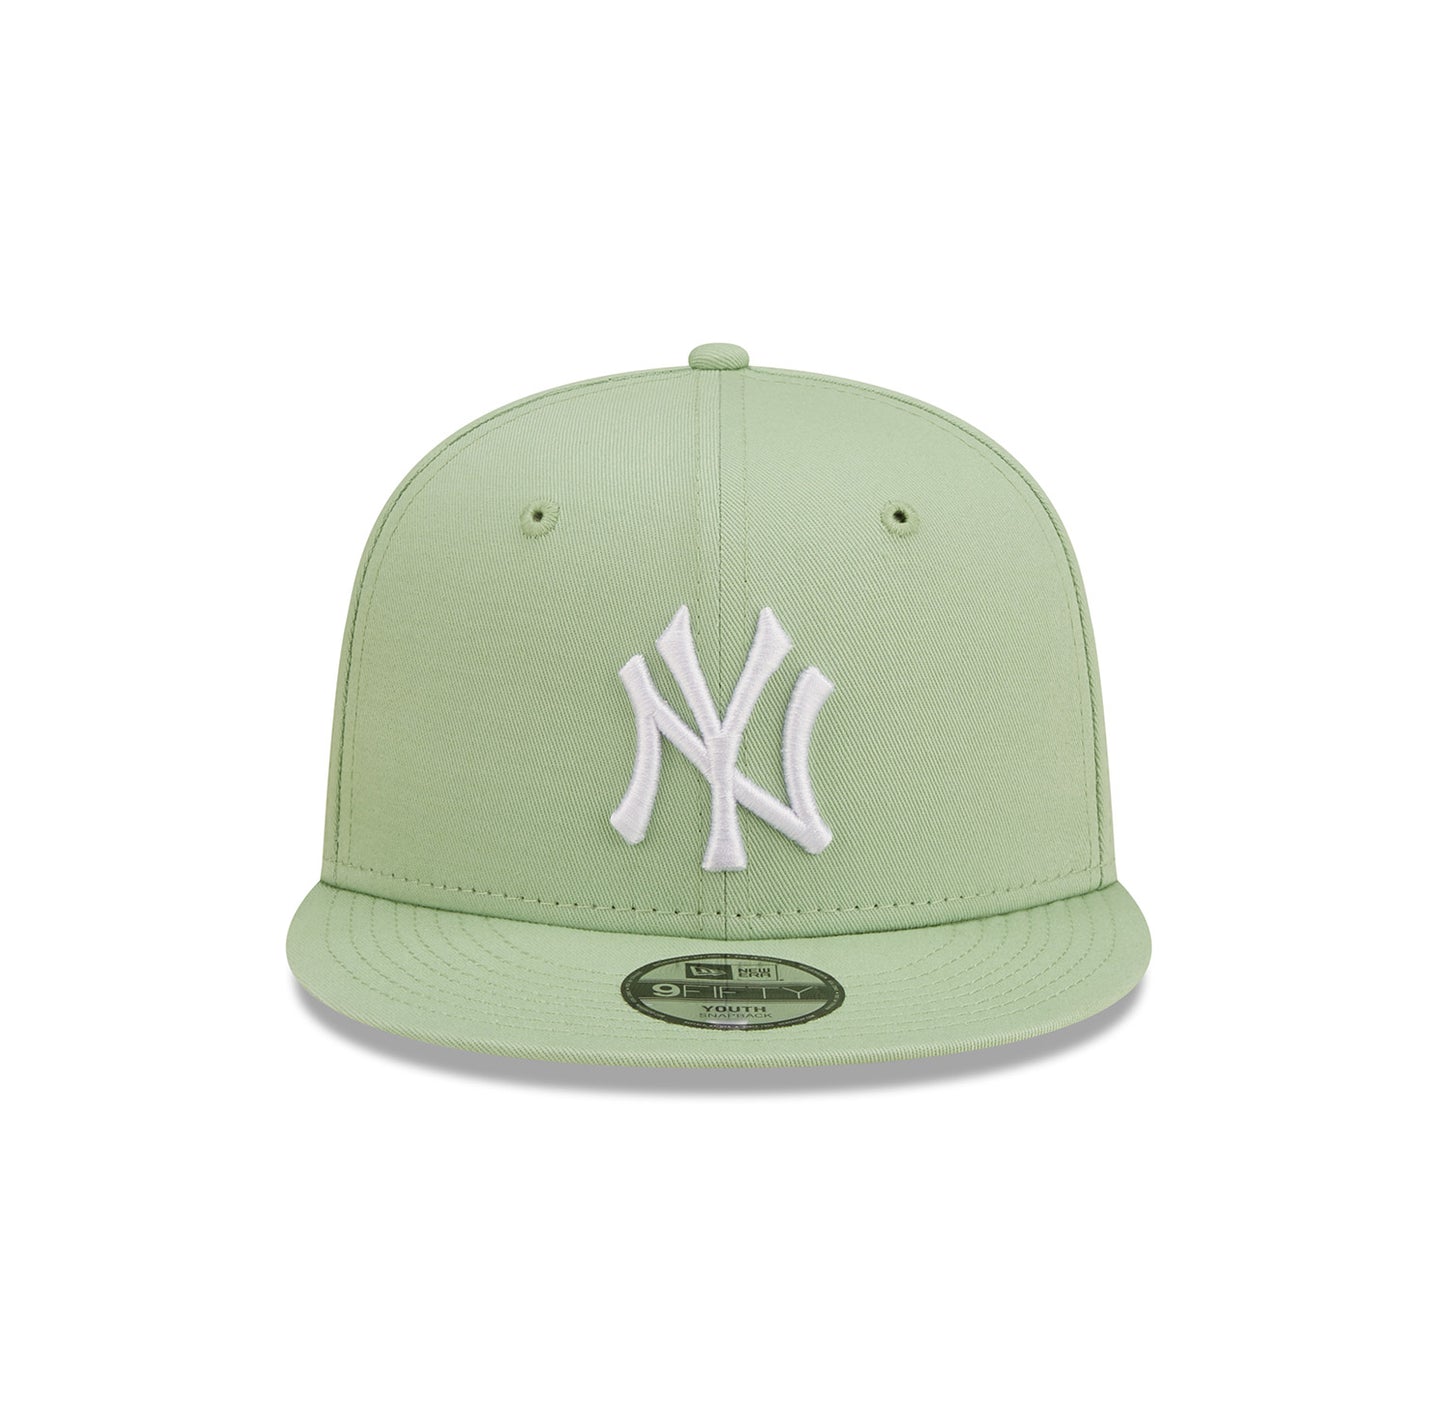 New Yankees New Era 9Fifty YOUTH Snap back Cap mint